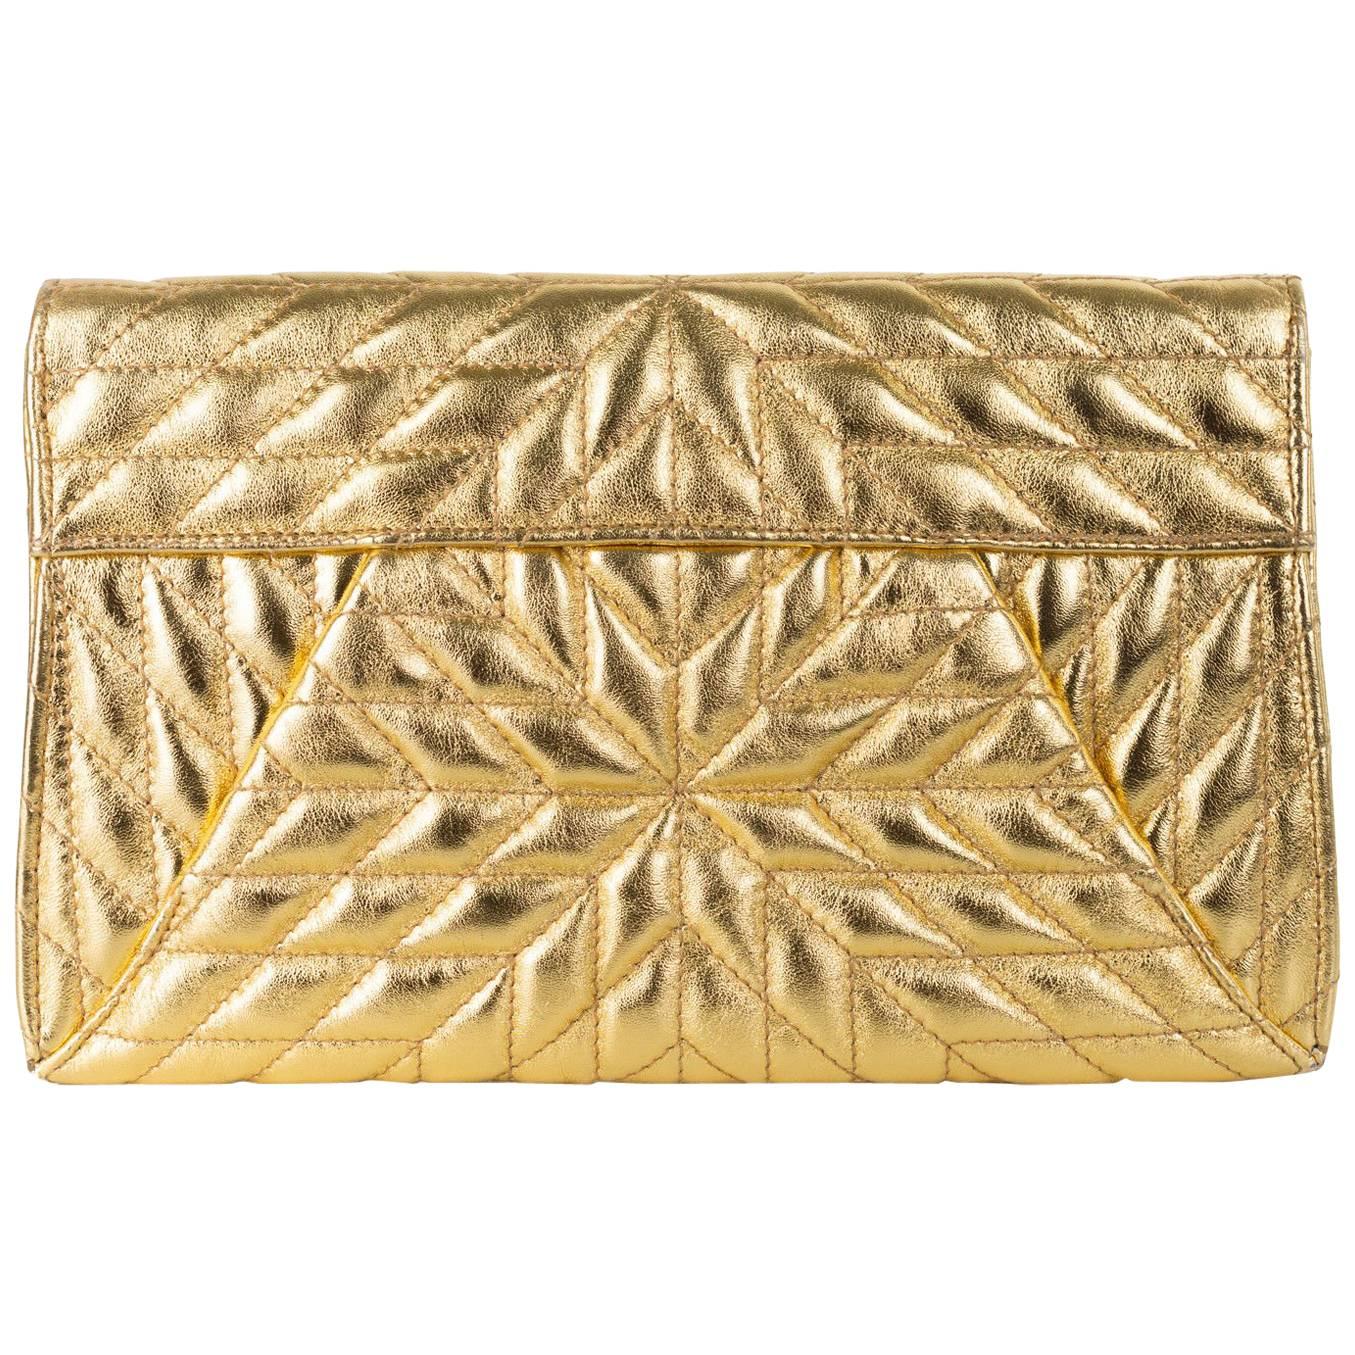 Roberto Cavalli Gold Metallic Large Quilted Shoulder Bag Clutch